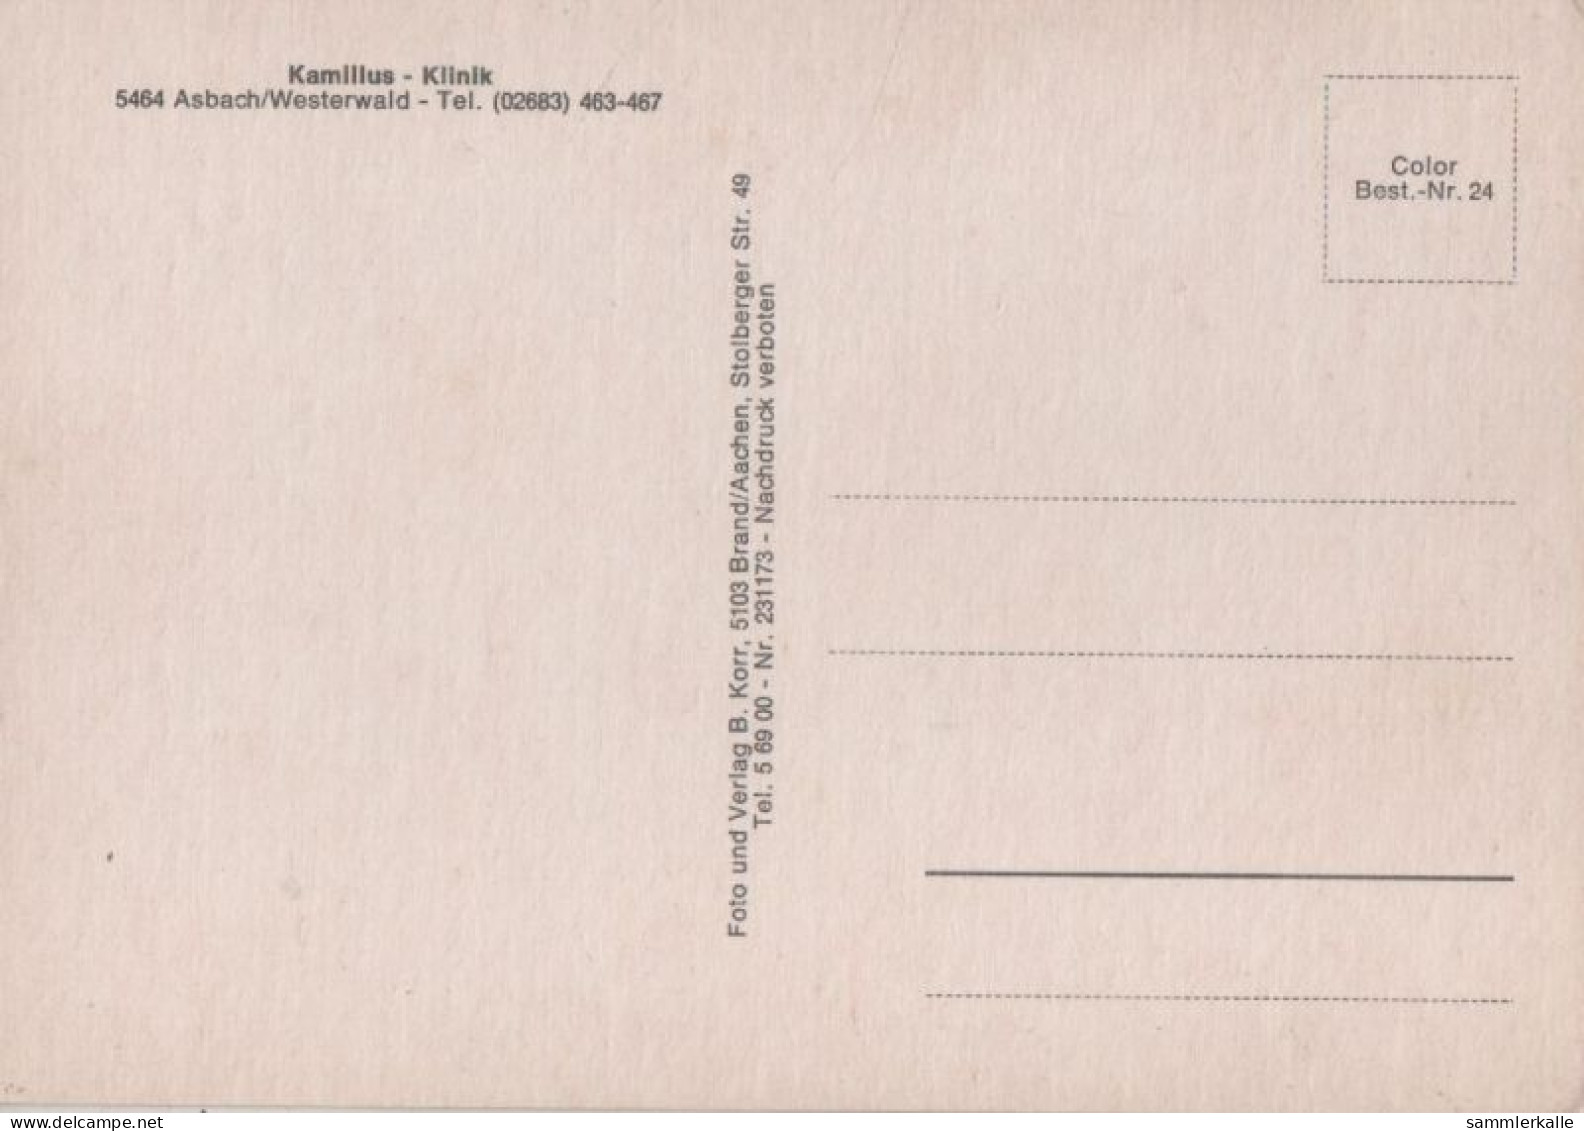 108770 - Asbach - Kamillus-Klinik - Neuwied